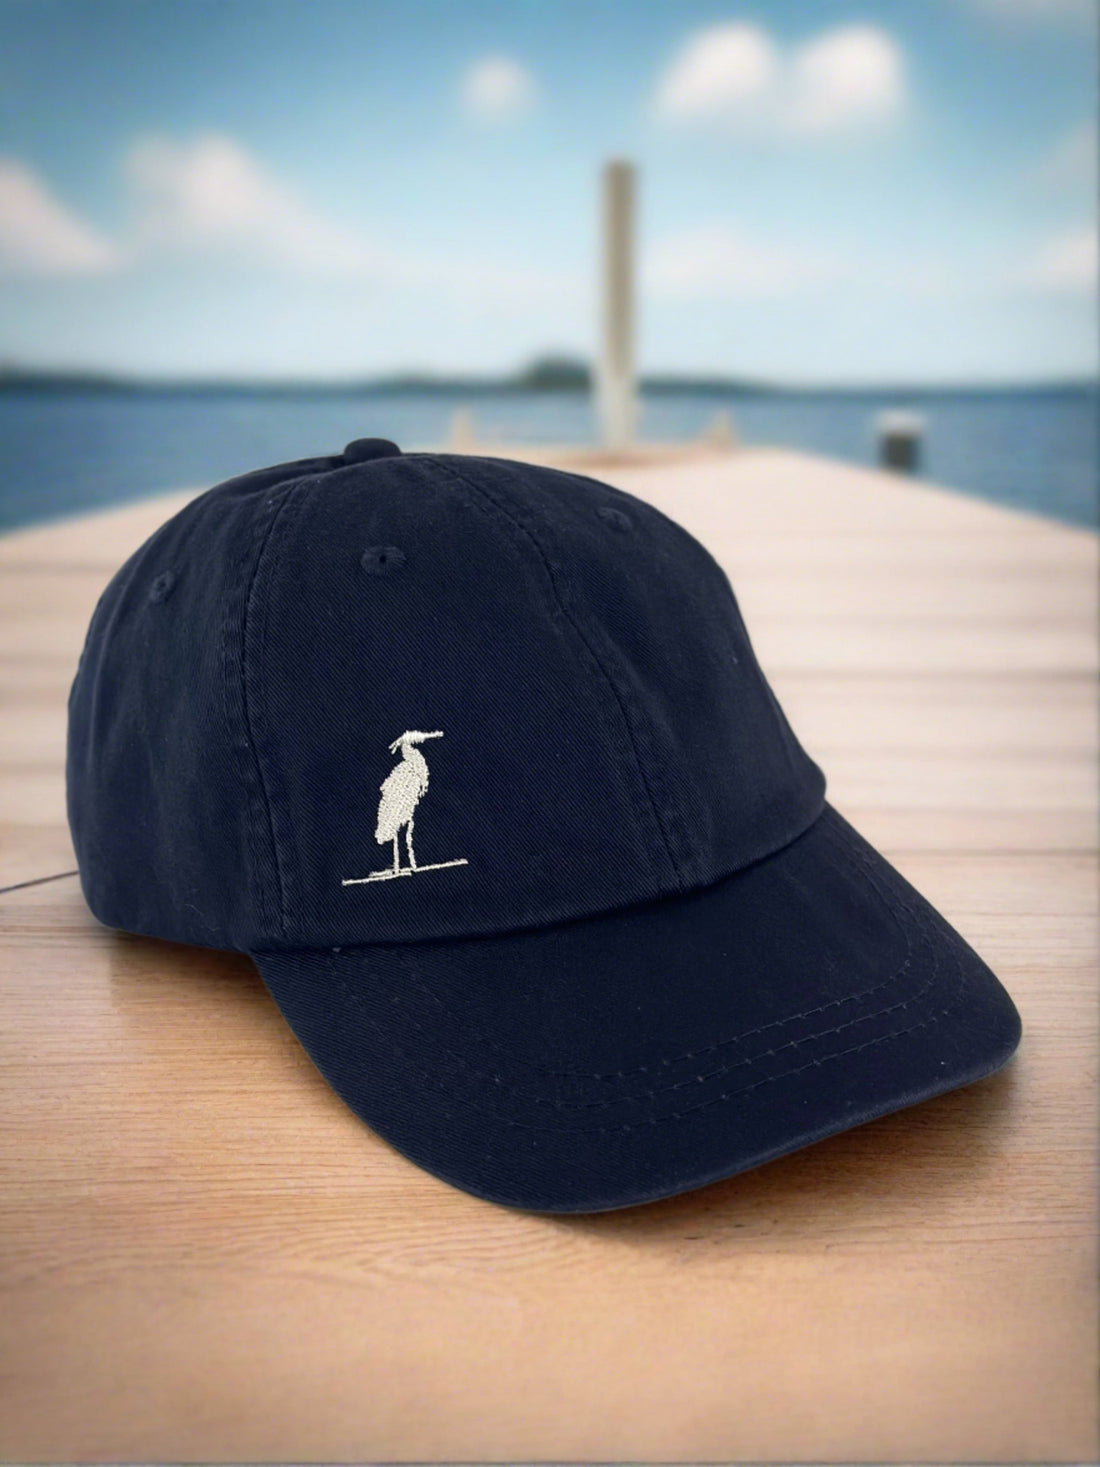 eastern shore brand, eastern shore hat, baseball cap, dad hat, navy blue hat, white hat, blue hat, embroidered hat, embroidered heron, heron hat